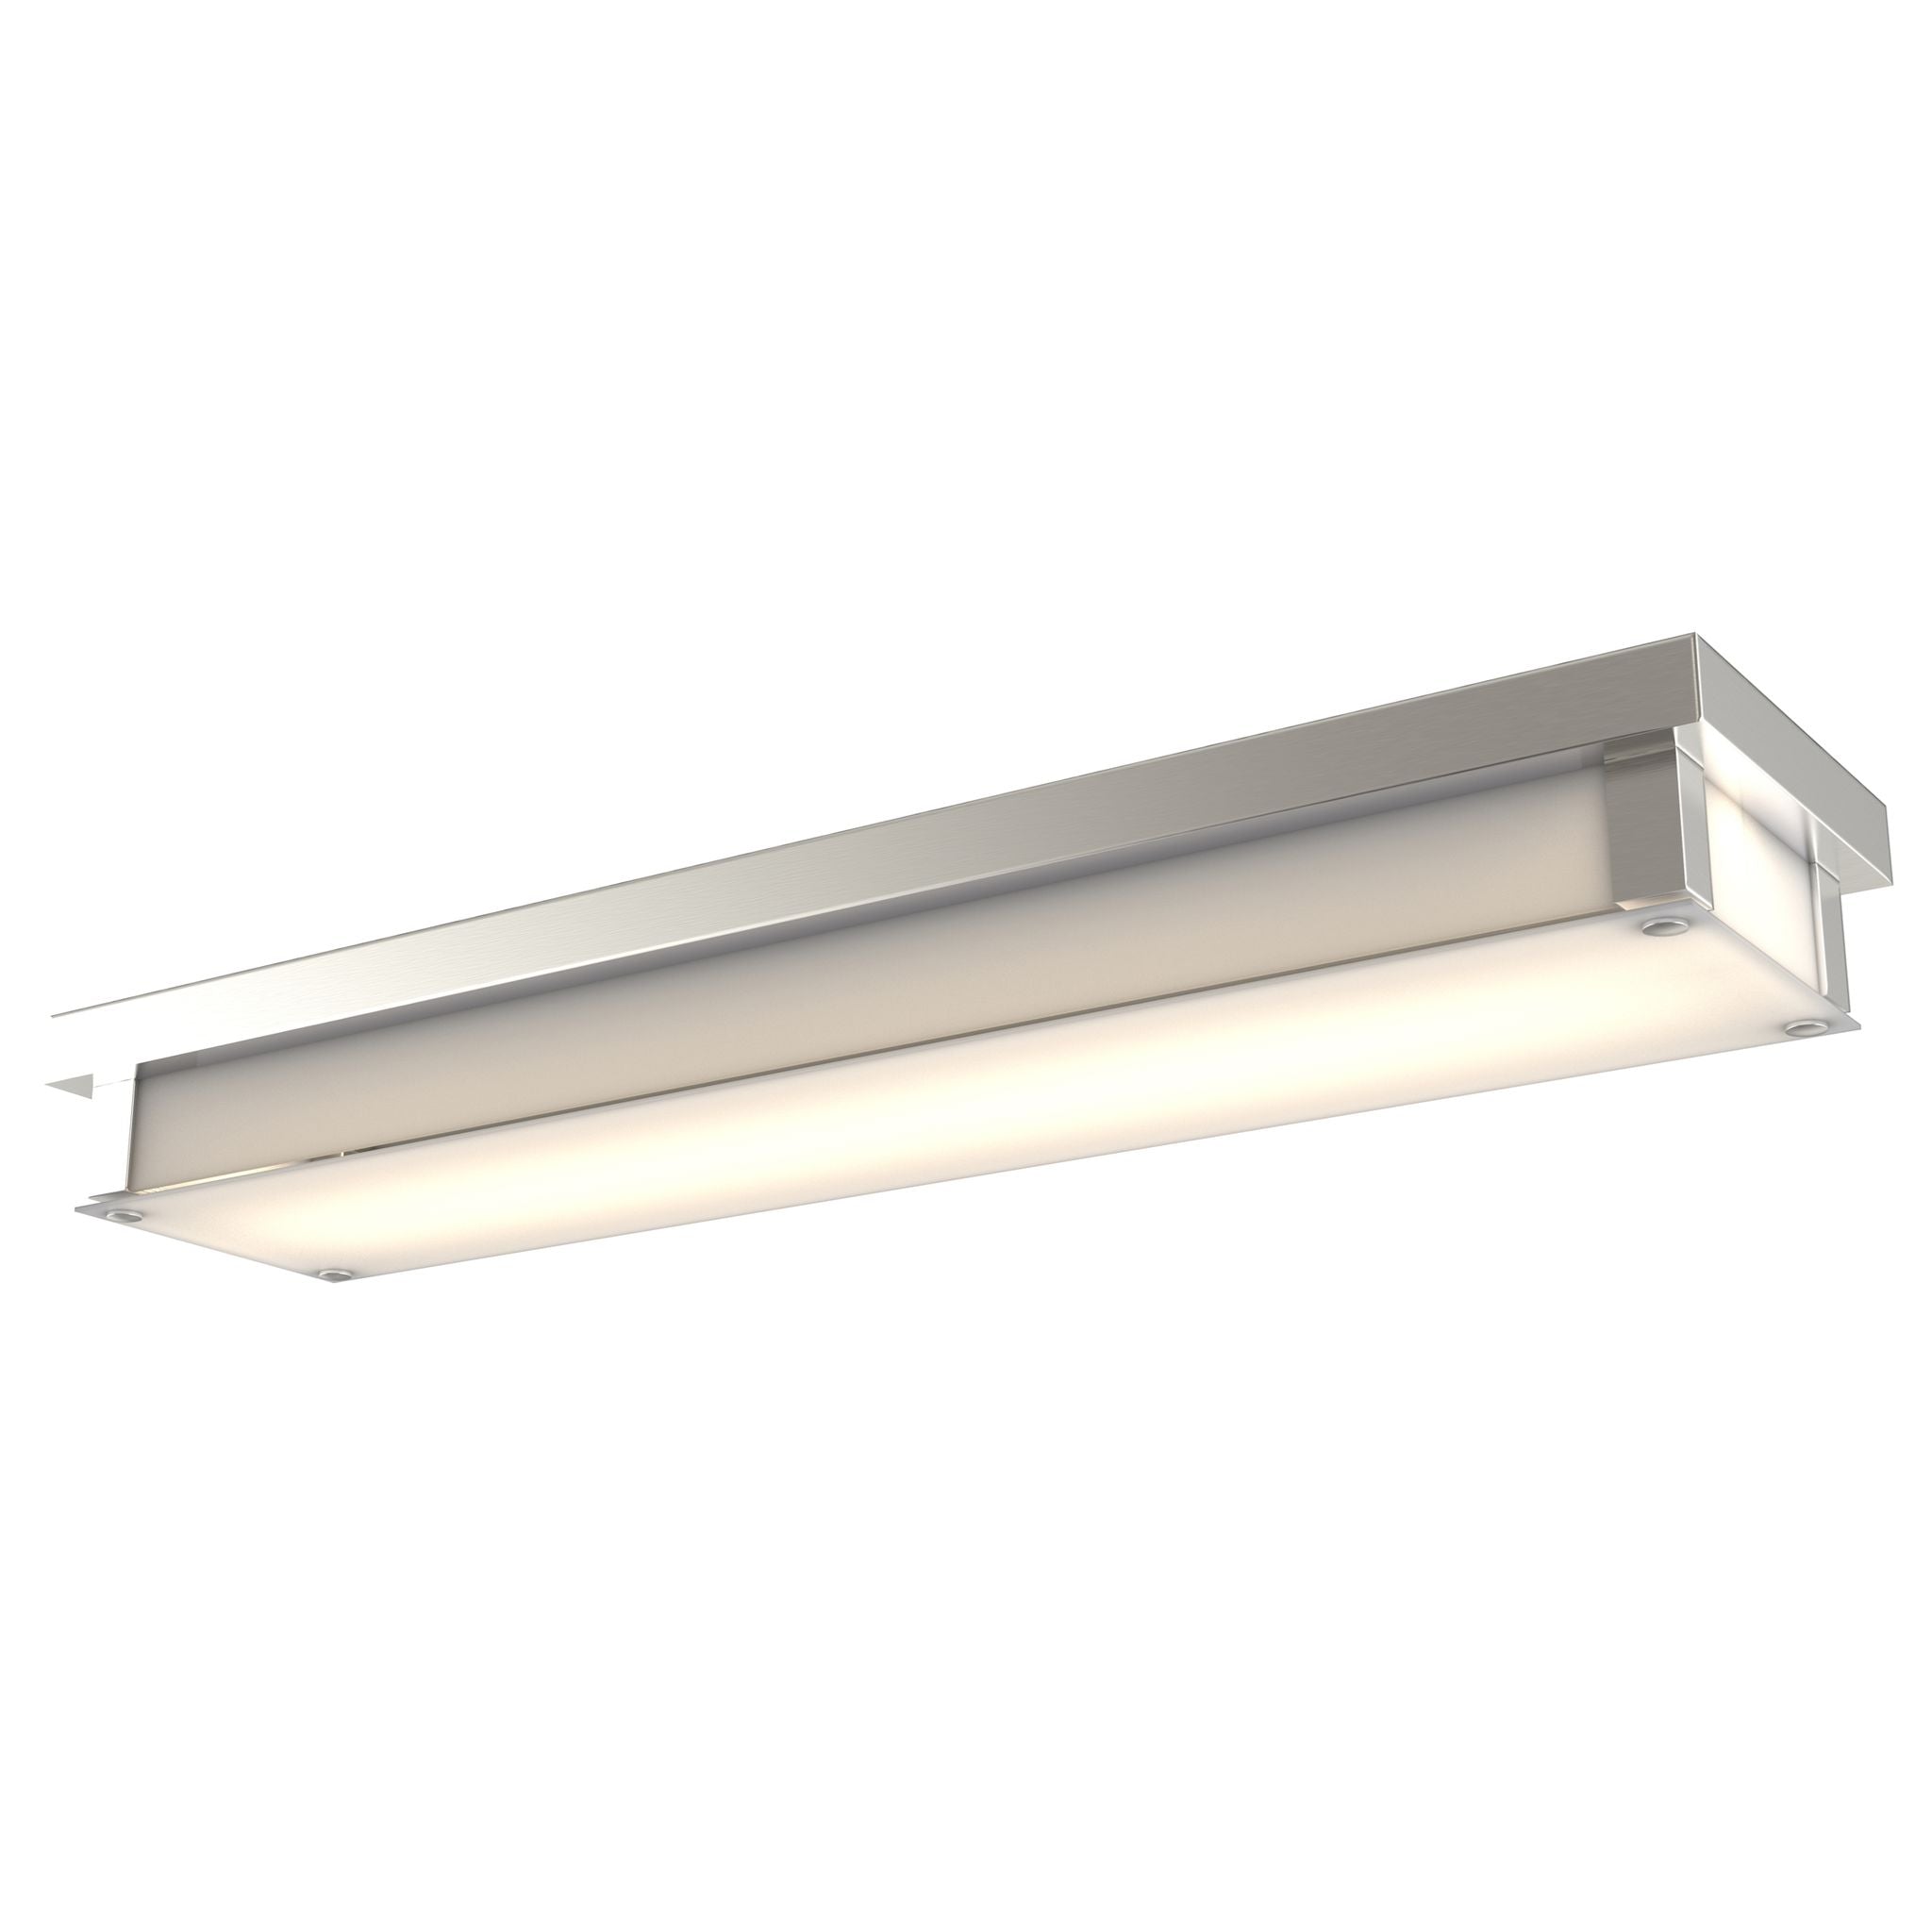 Helios AC LED Bathroom sconce Stainless steel INTEGRATED LED - DVP10393BN-SSW | DVI